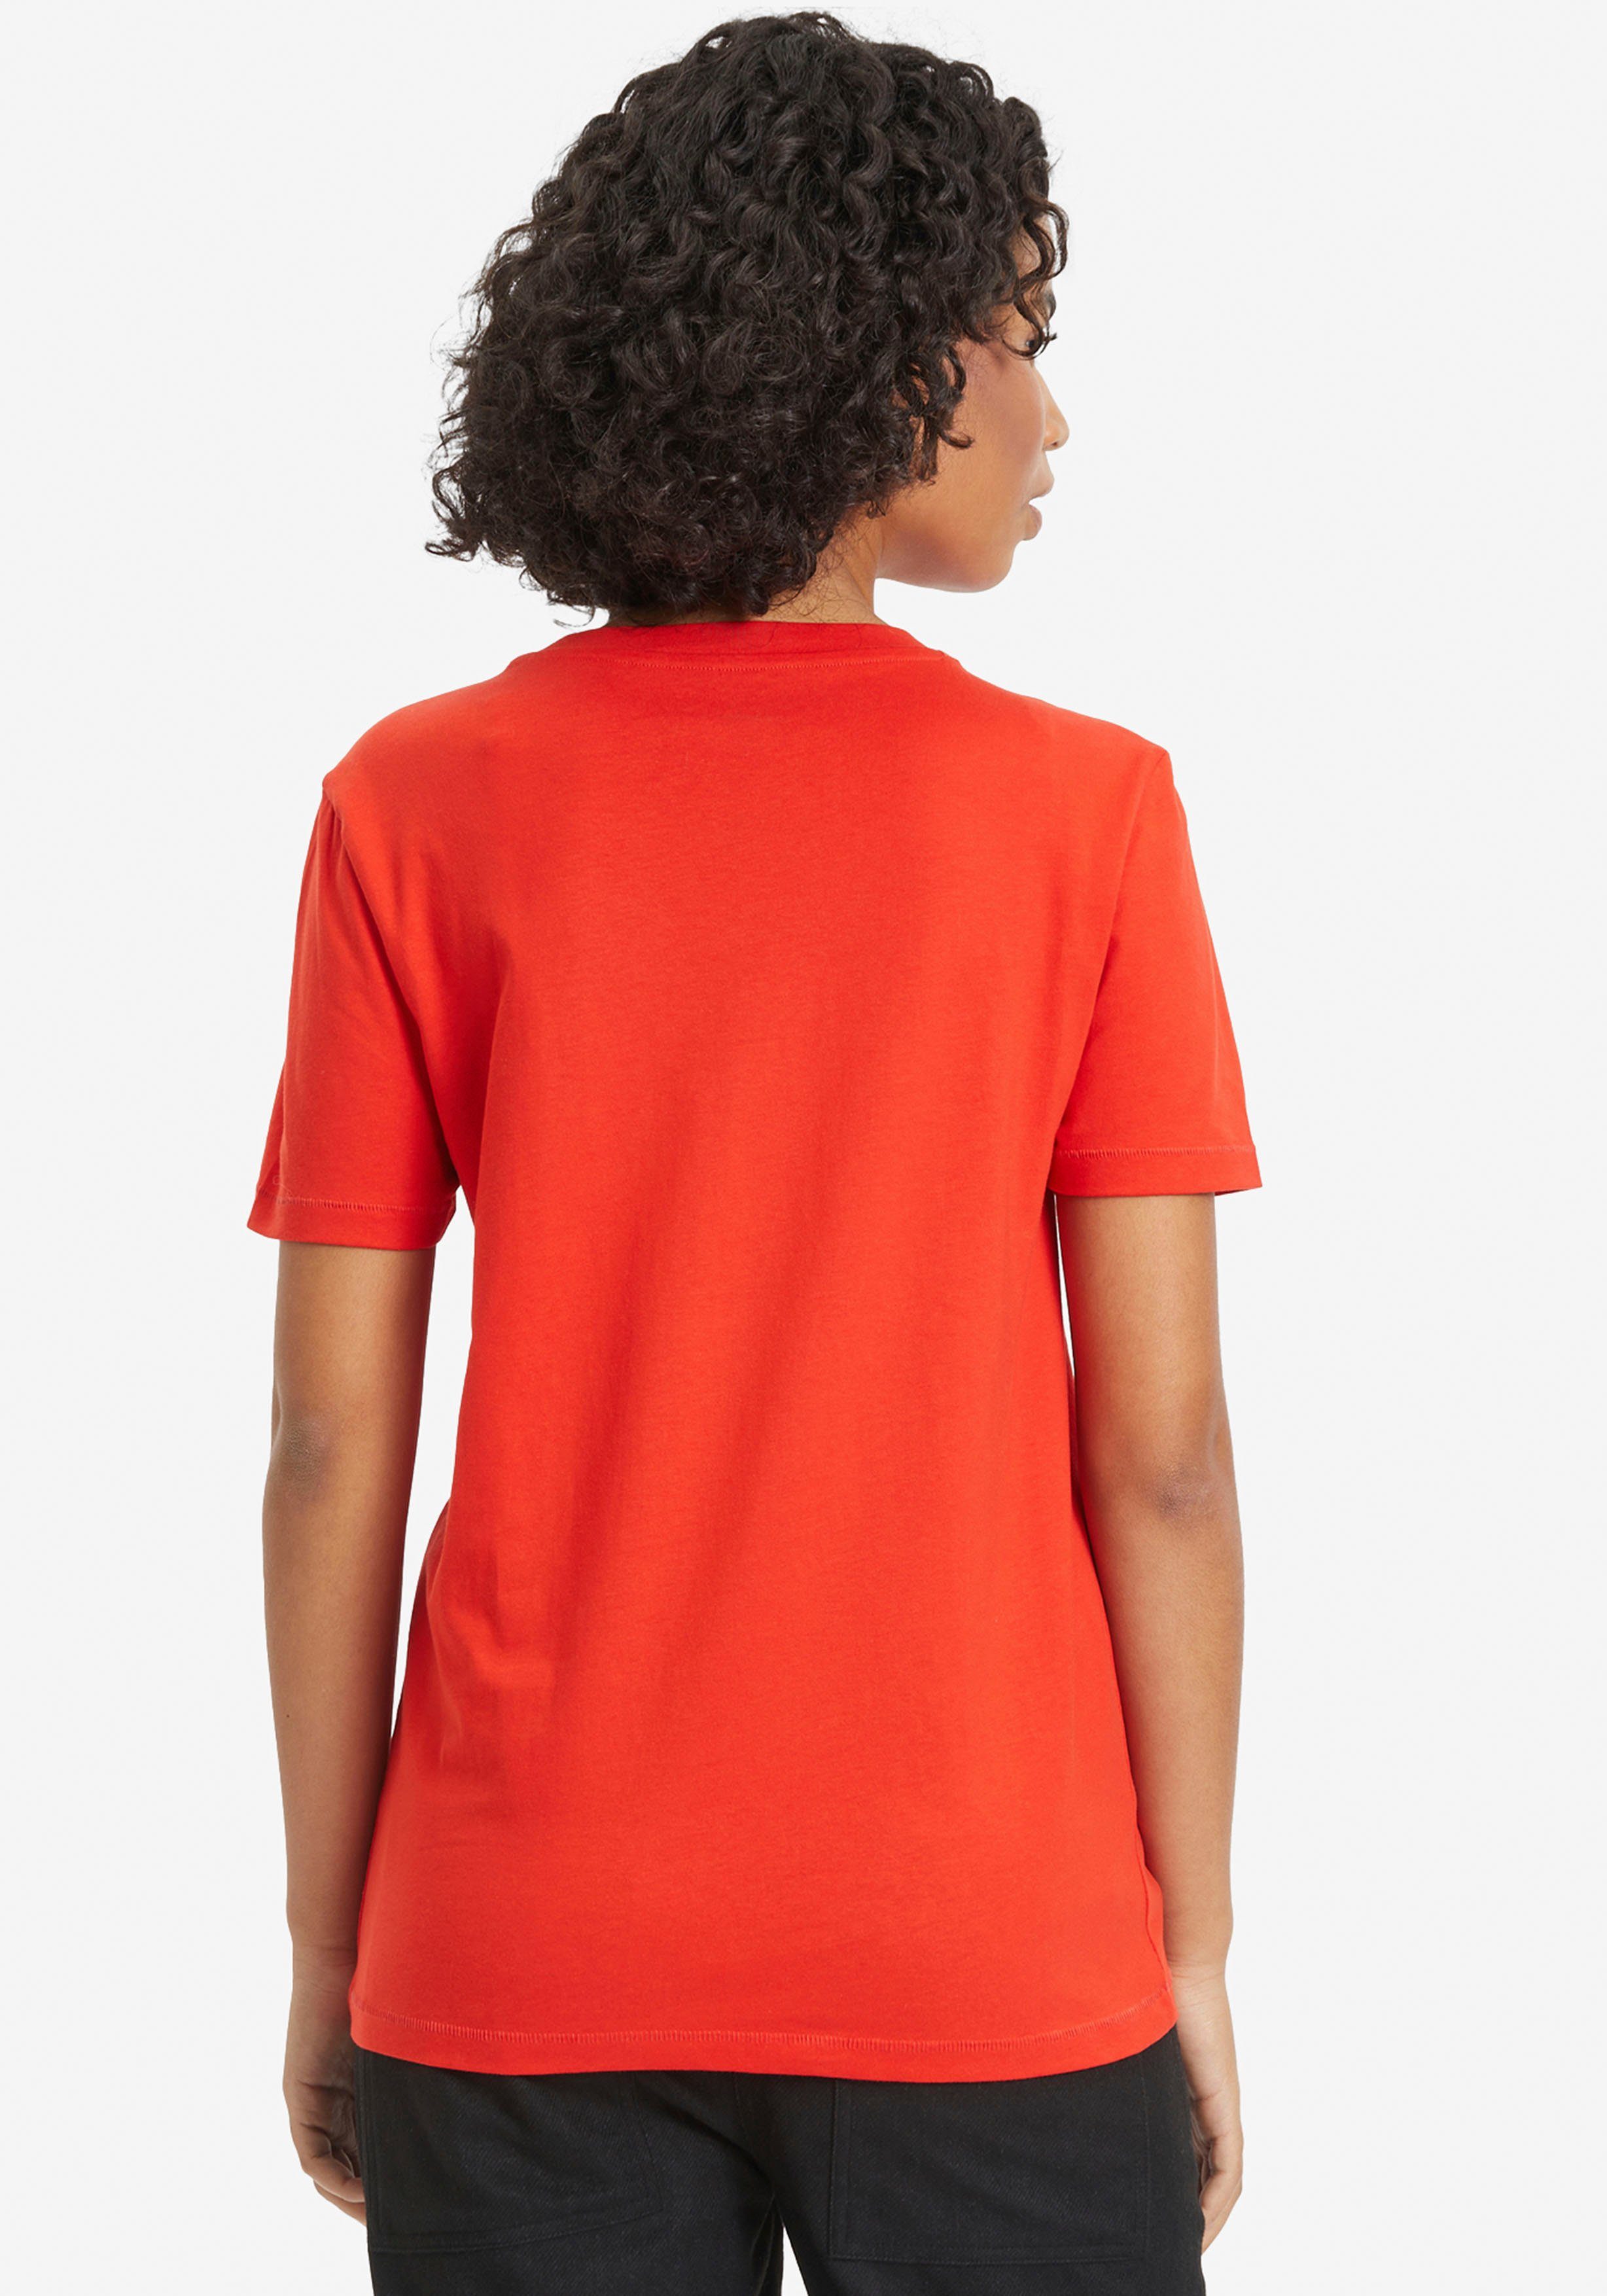 T-Shirt Tamaris fiery red Rundhalsausschnitt KOLLEKTION NEUE mit -